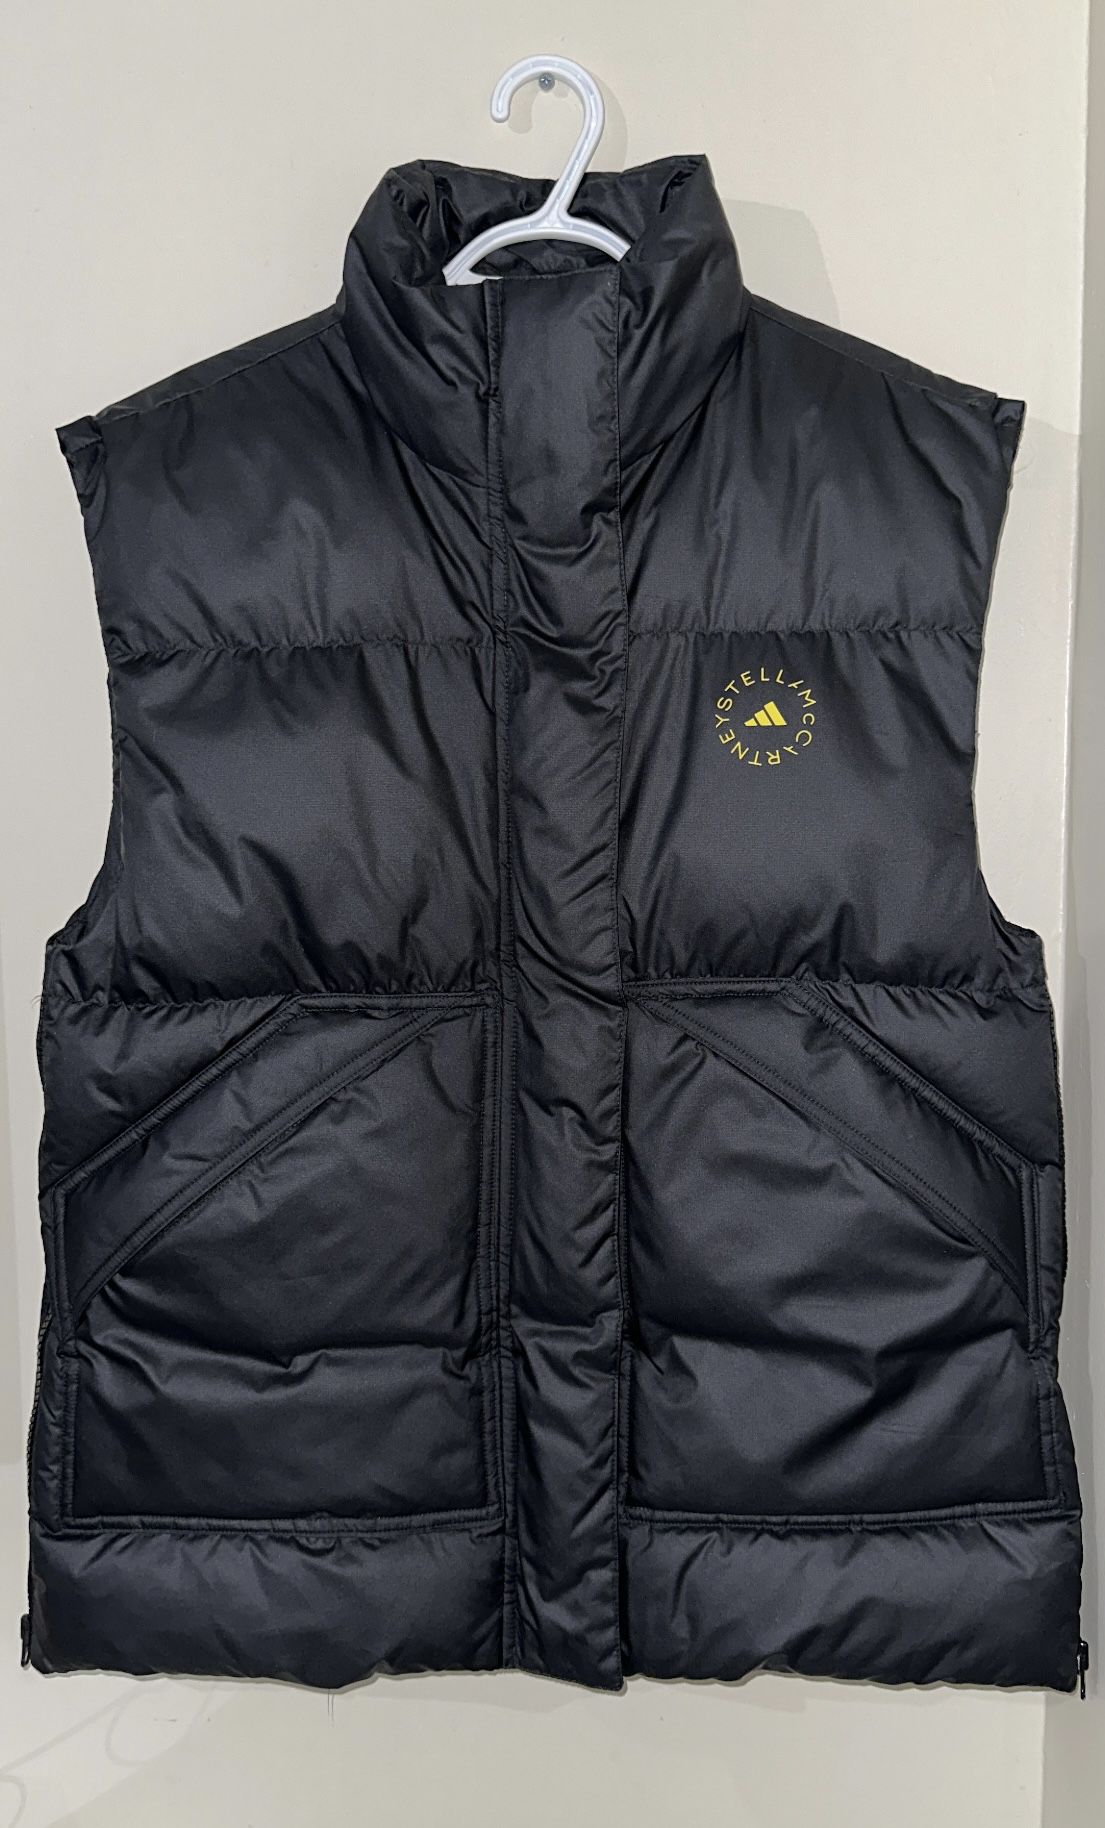 Adidas by Stella McCartney - Puffer vest